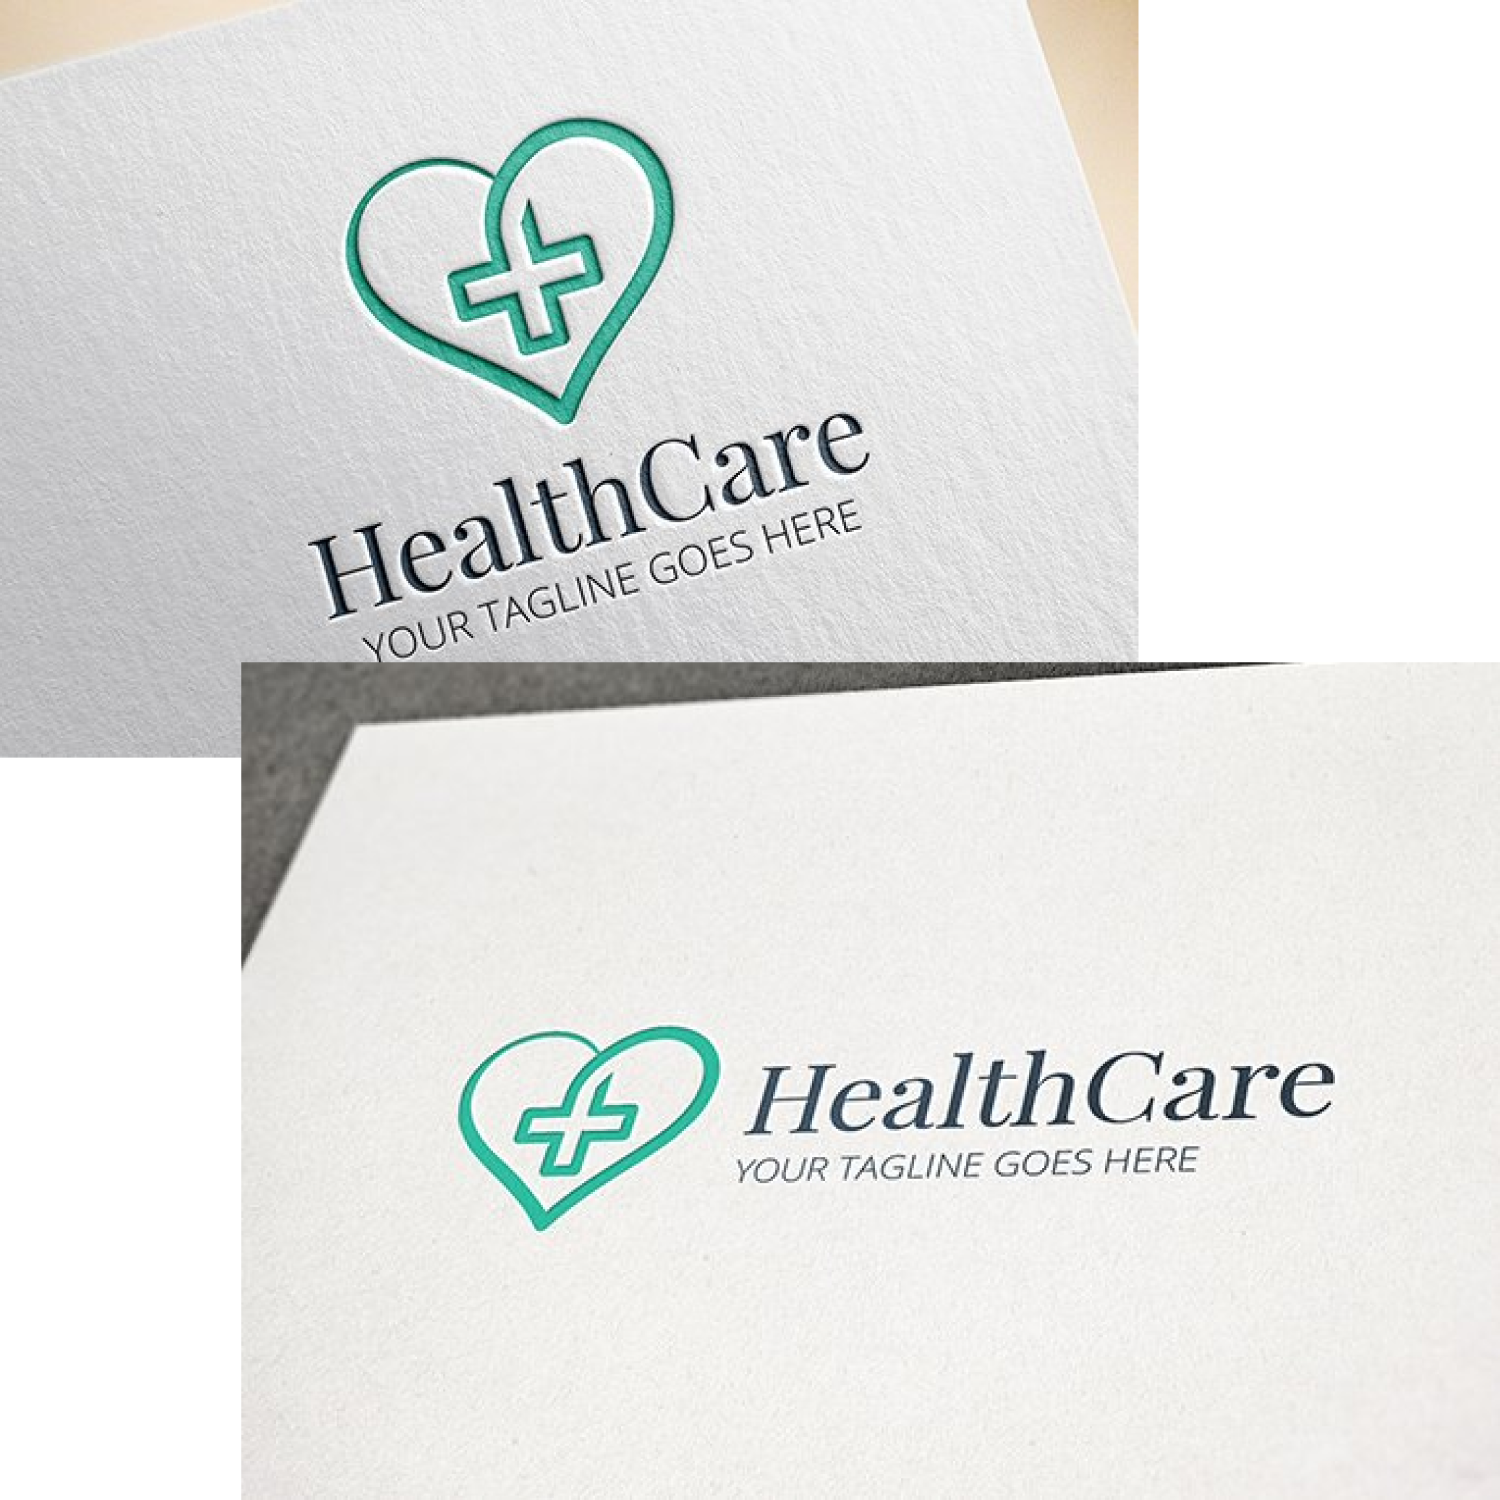 Health care medical symbol logo.